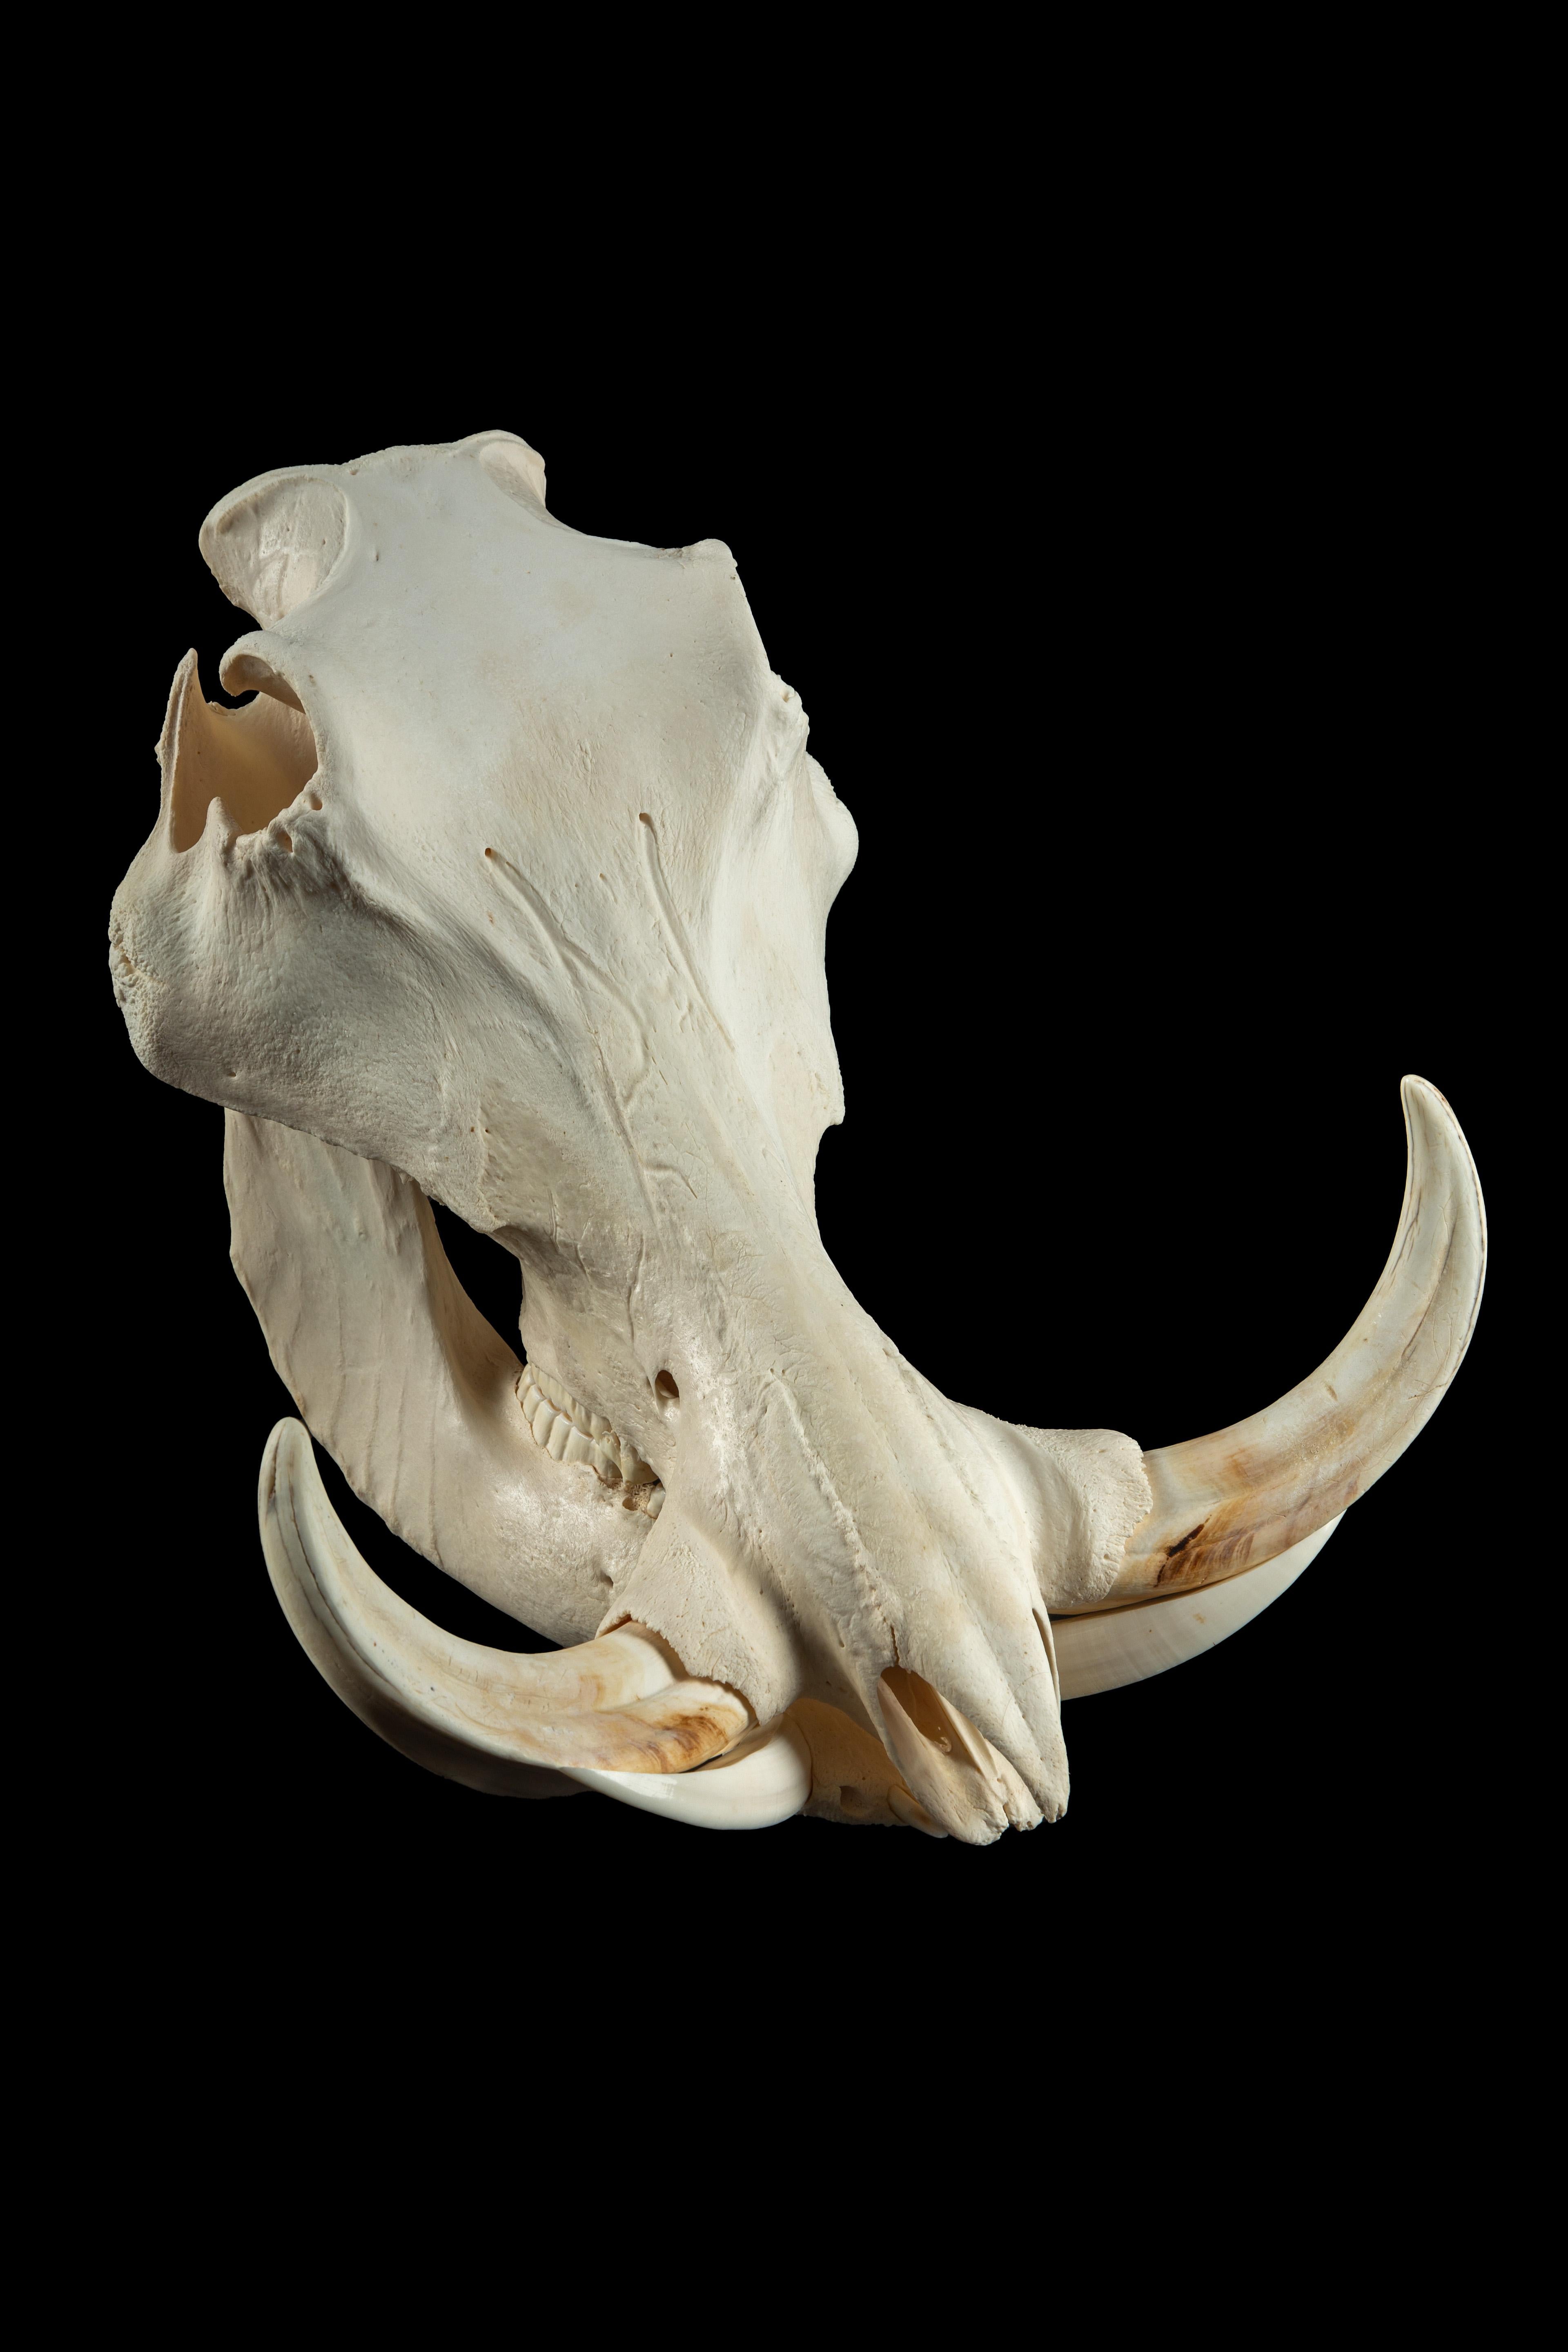 Warthog skull:

Measures: 13